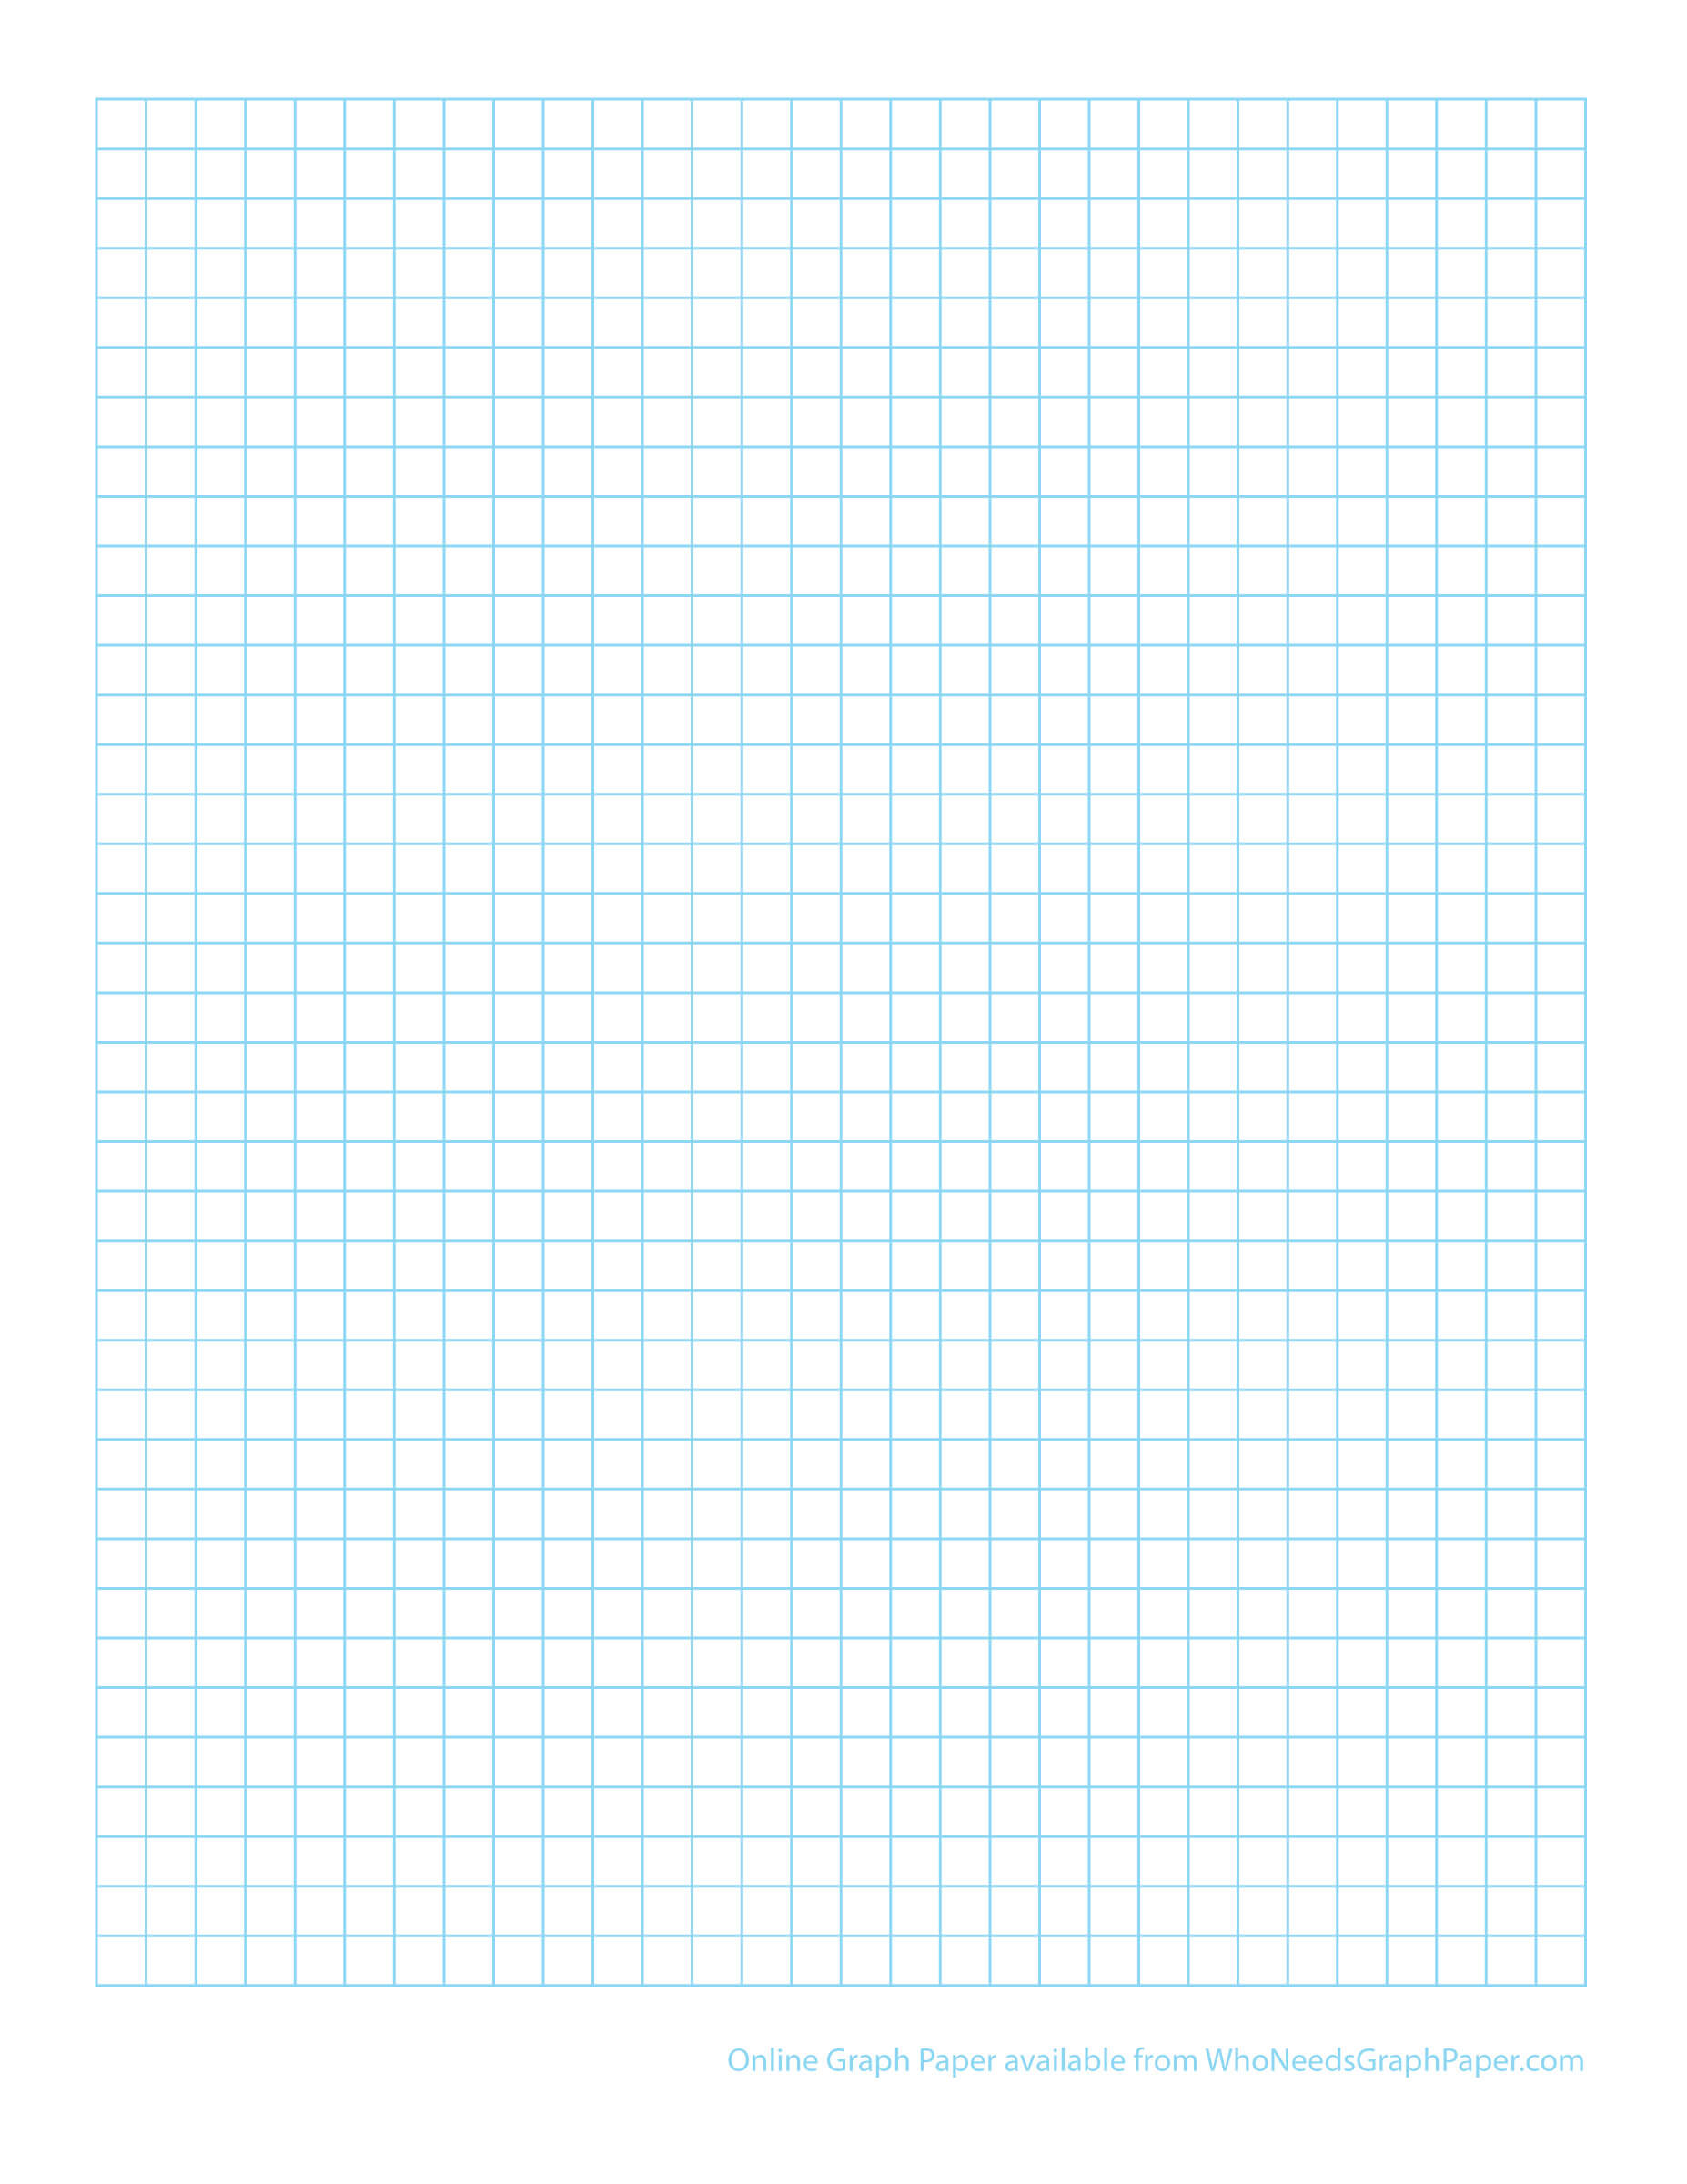 Graph Paper Image To Print - Tunu.redmini.co For 1 Cm Graph Paper Template Word